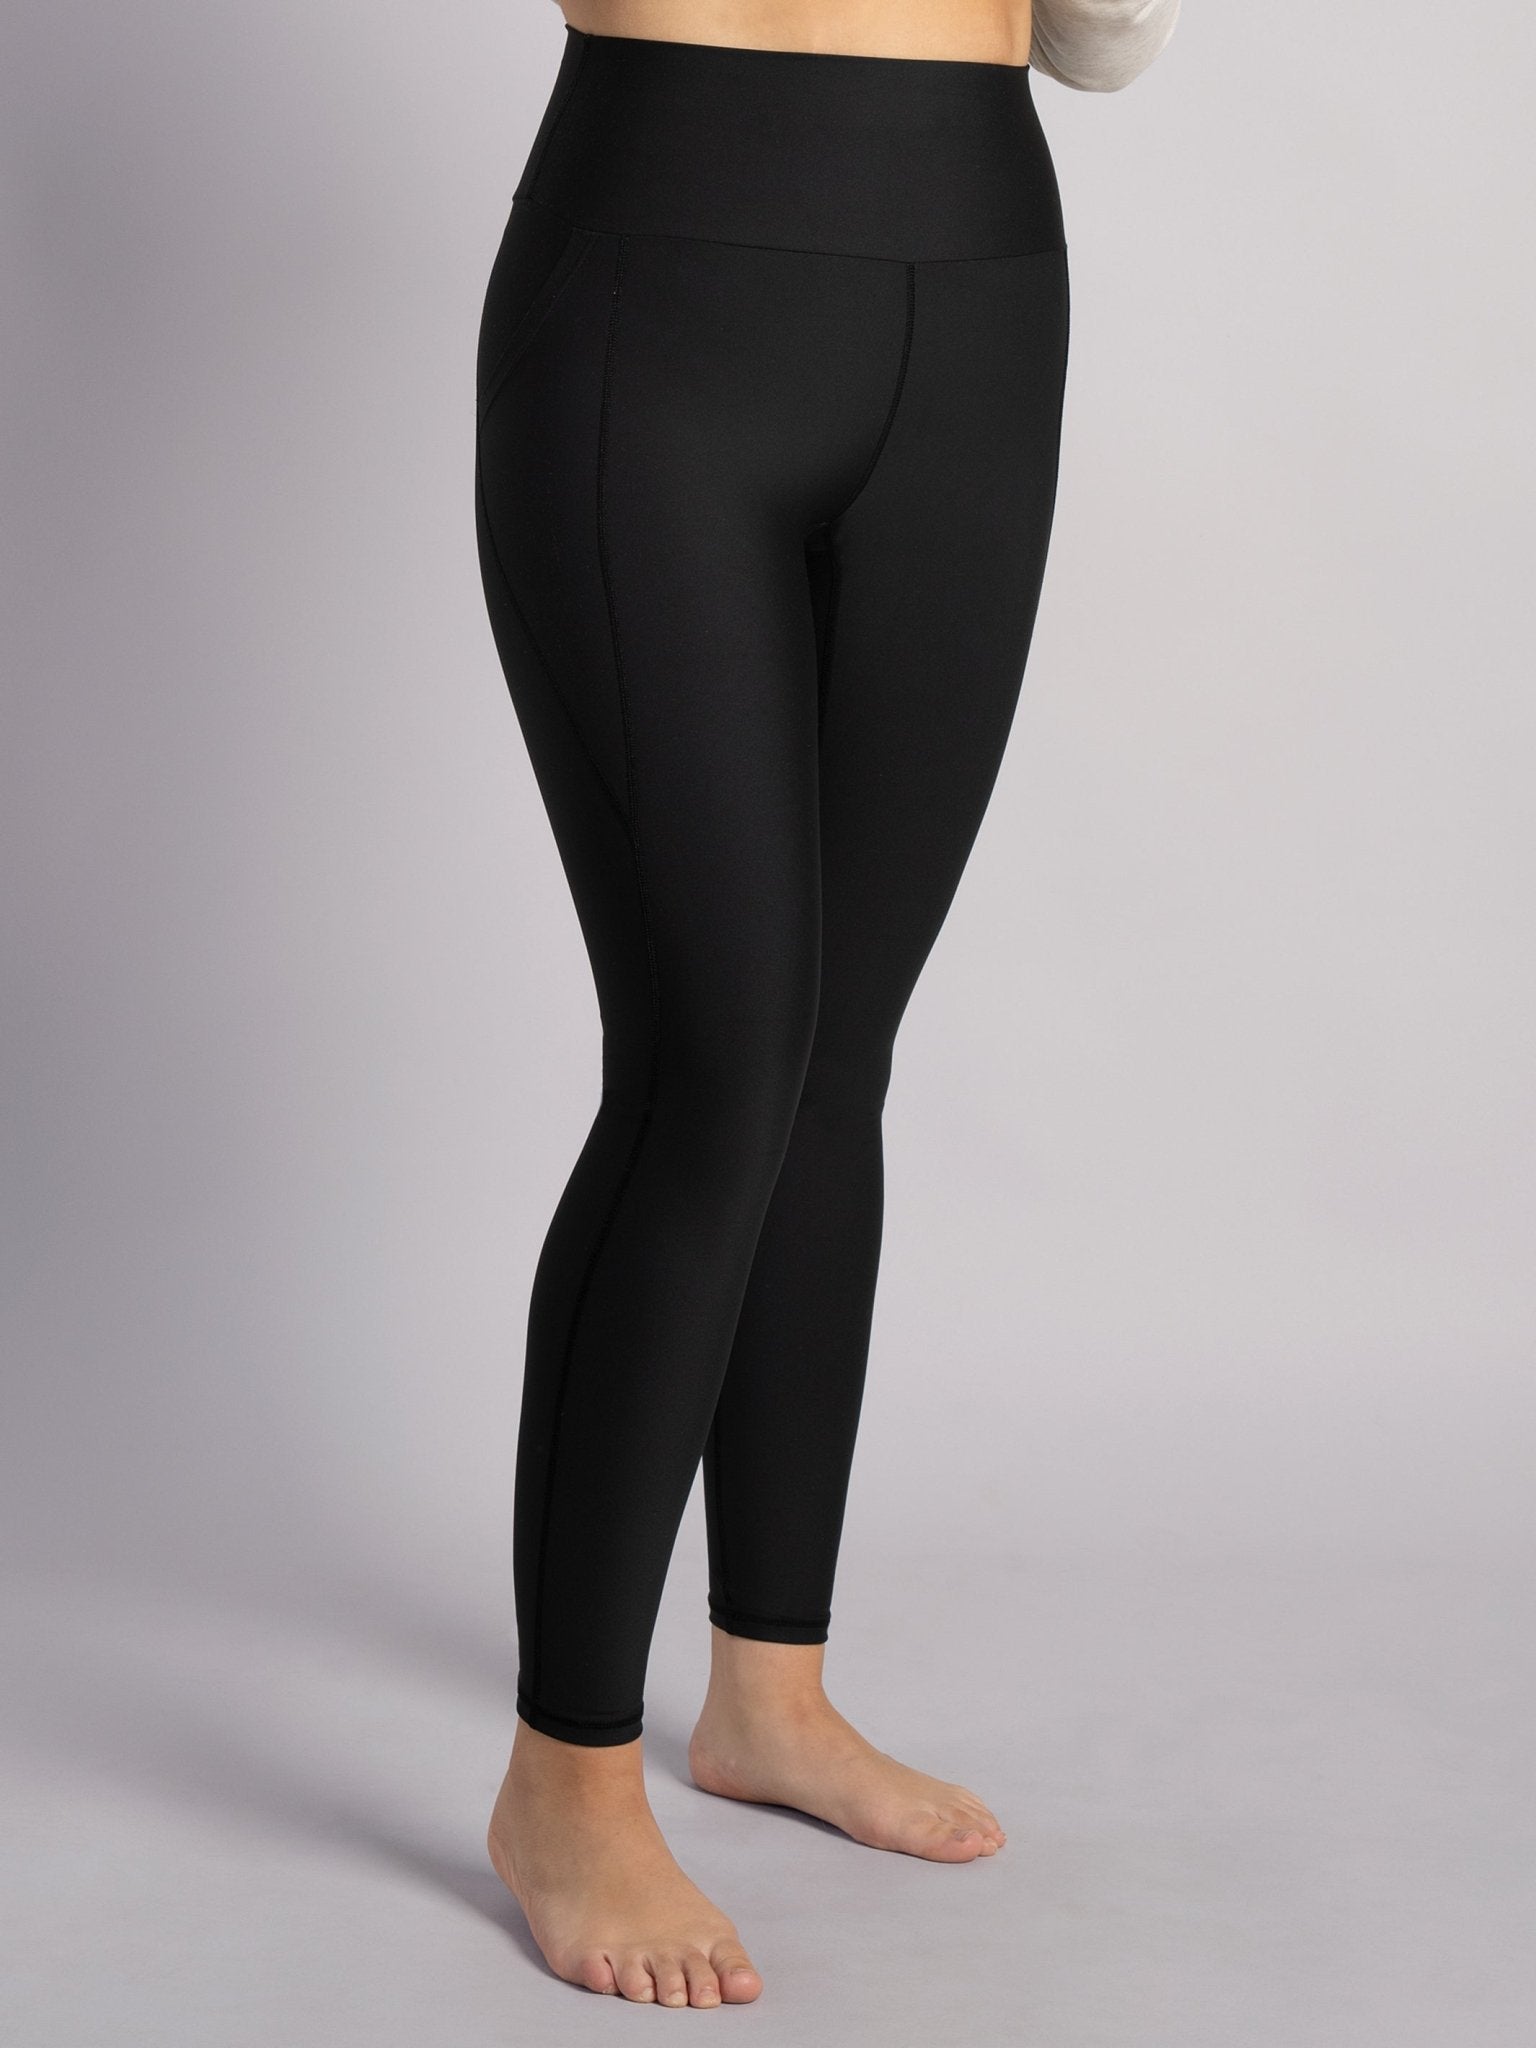 90 DEGREE By Reflex Black Leggings Activewear Yoga Size Medium M